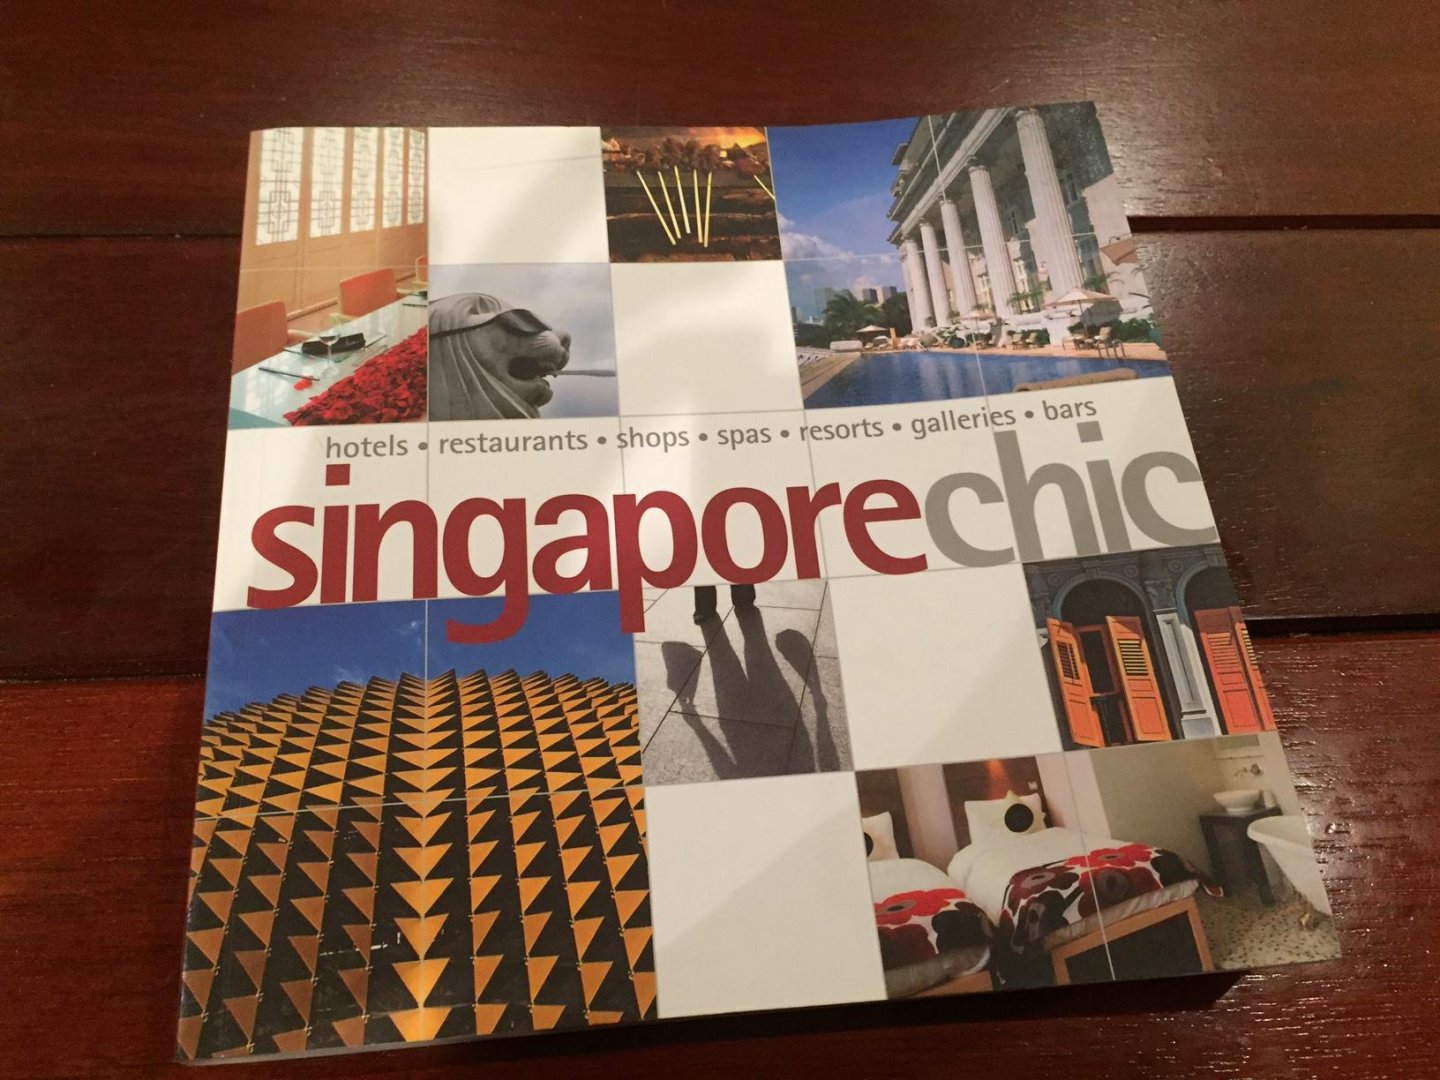 Koh, Aun - Singapore Chic / Hotels, Restaurants, Shops, Spas, Resorts, Galleries, Bars